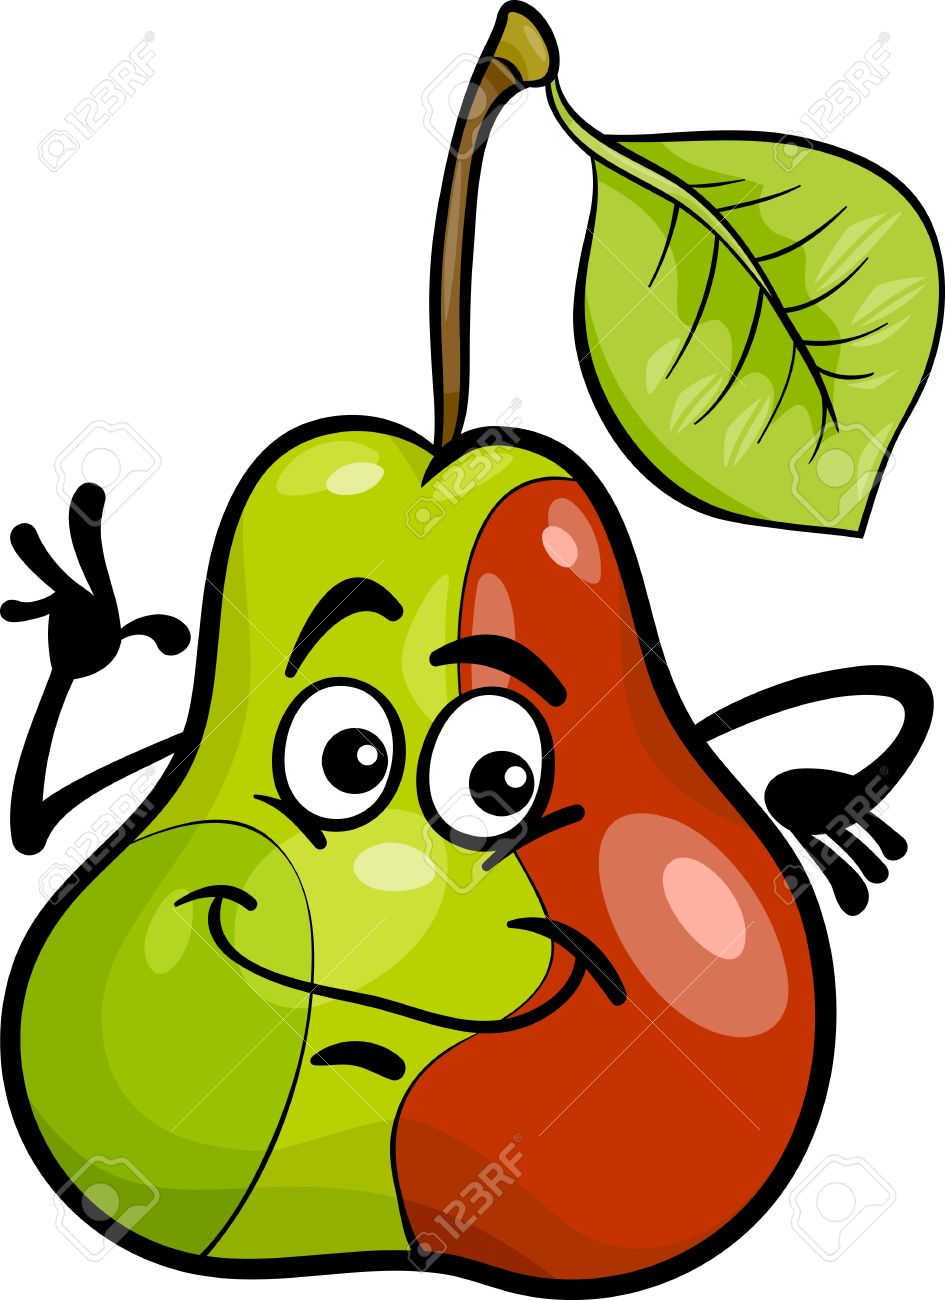 Cartoon Illustration Of Funny Pear Fruit Food Comic Character.